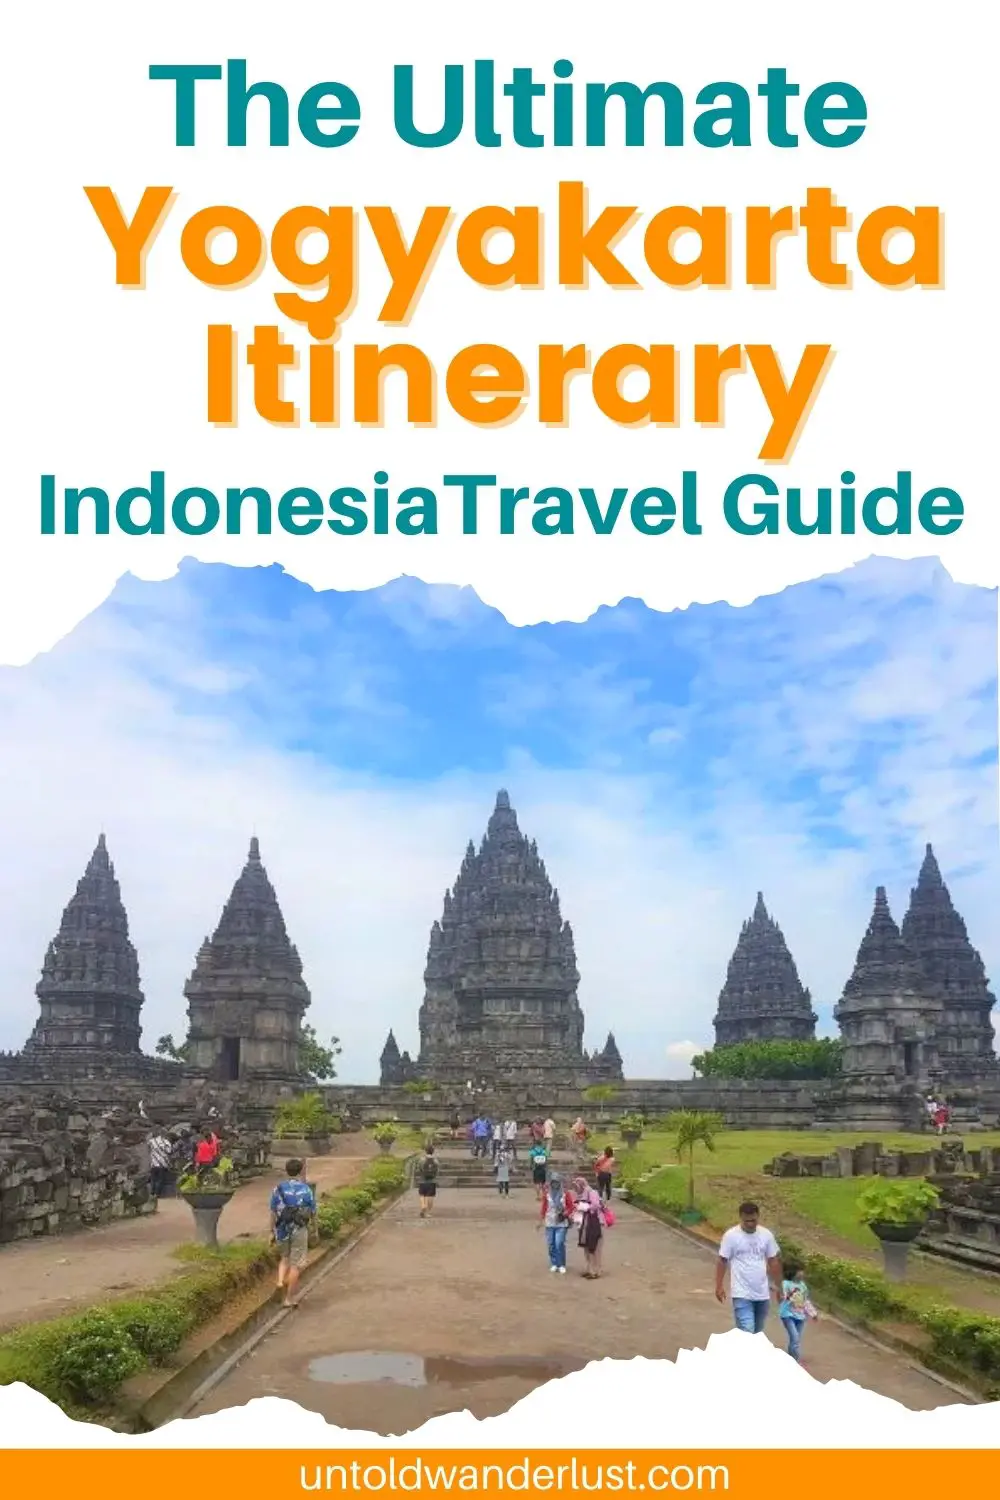 The Ultimate 2-Day Yogyakarta, Indonesia Itinerary